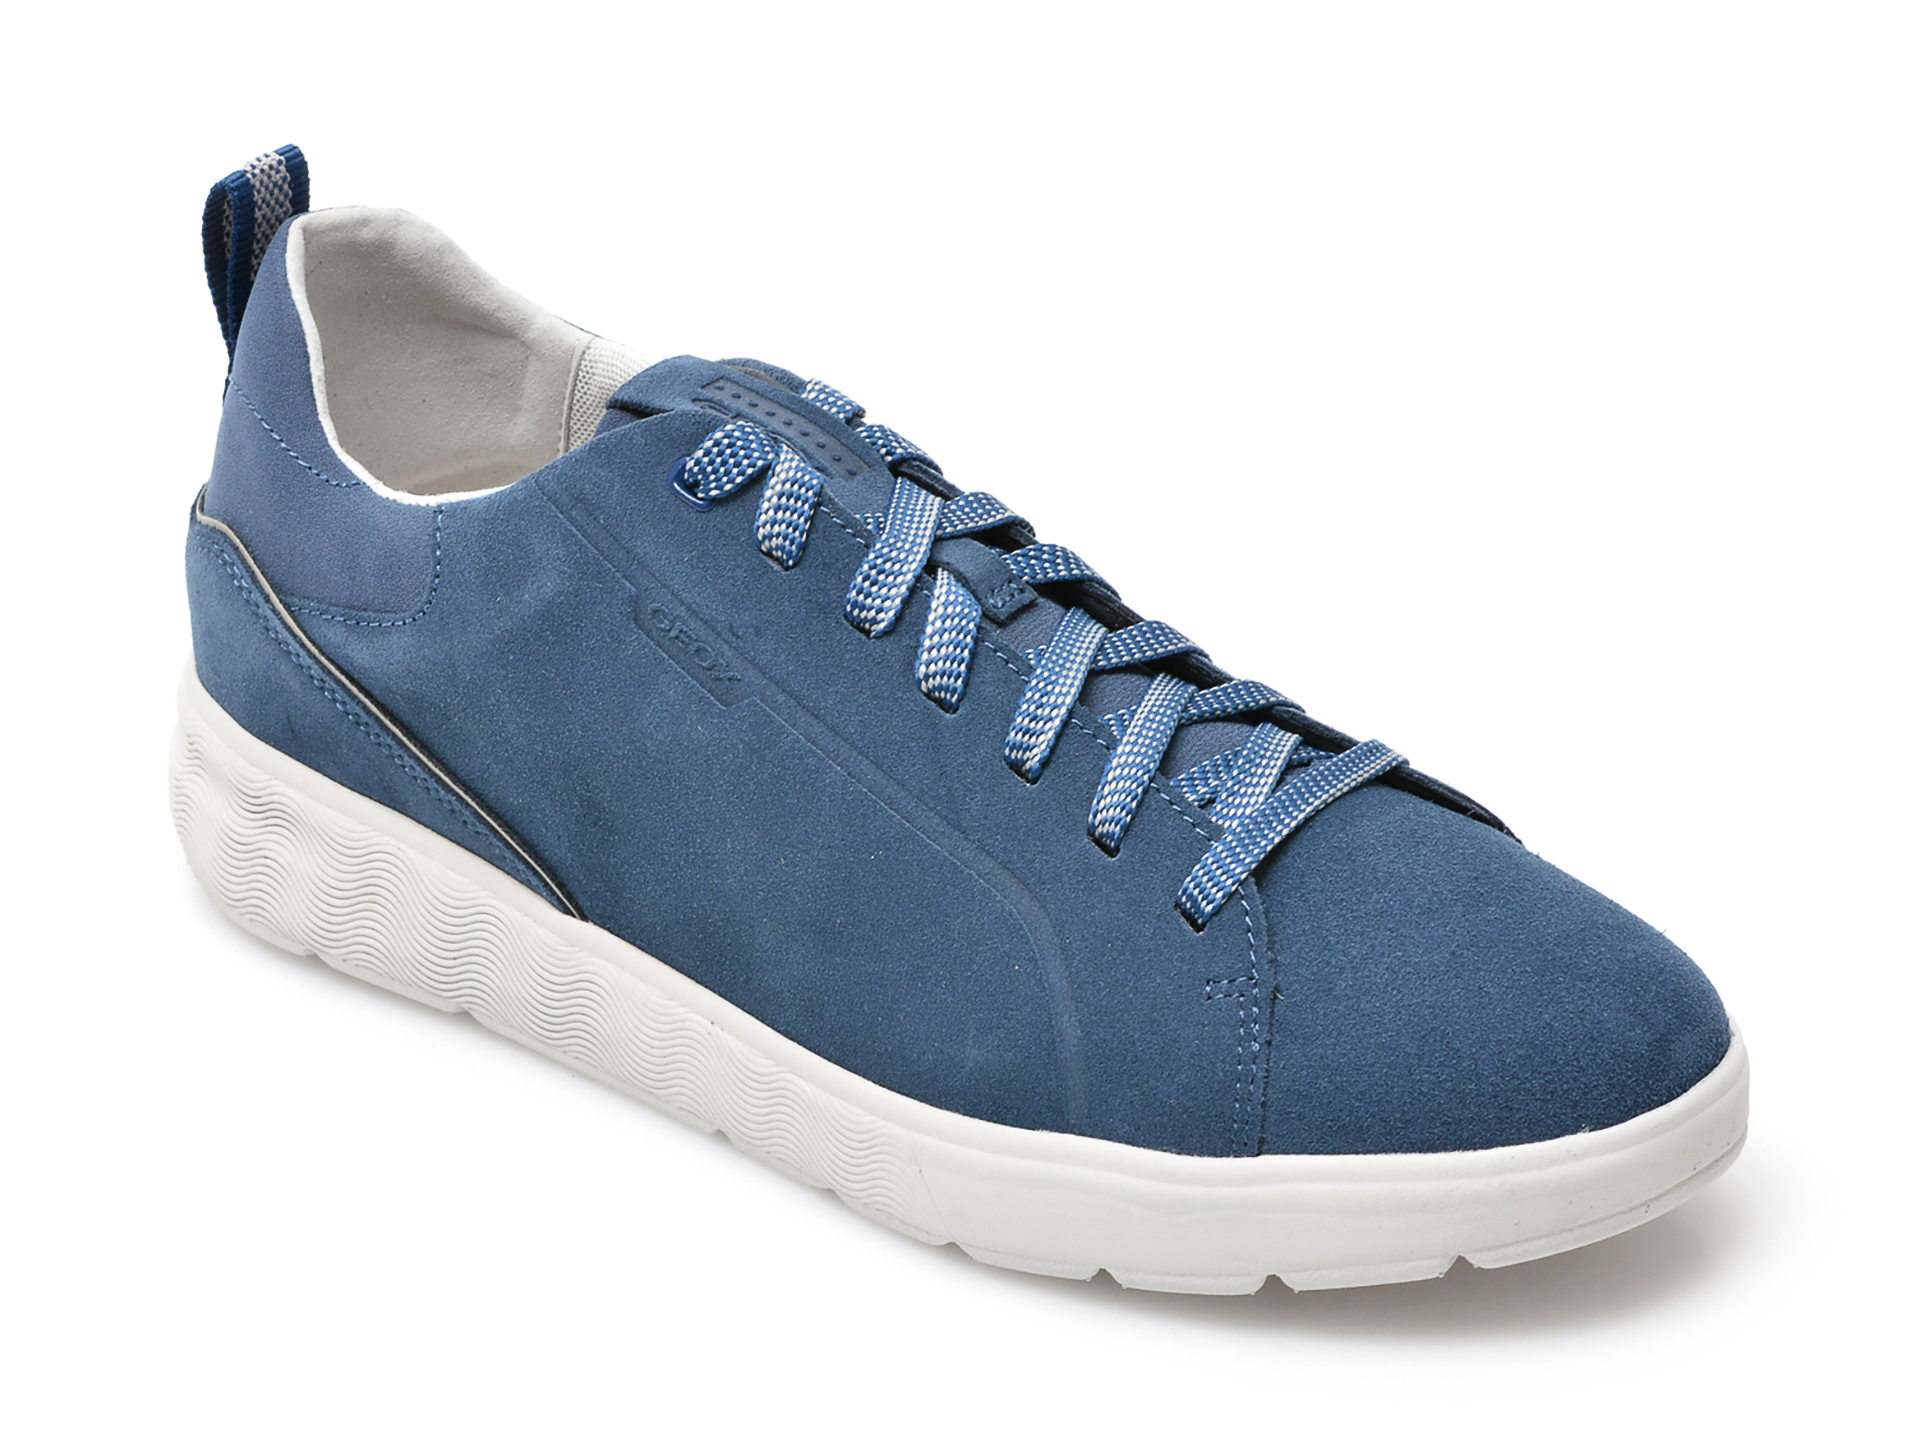 Pantofi sport GEOX albastri, U25E7B, din piele intoarsa Geox Geox